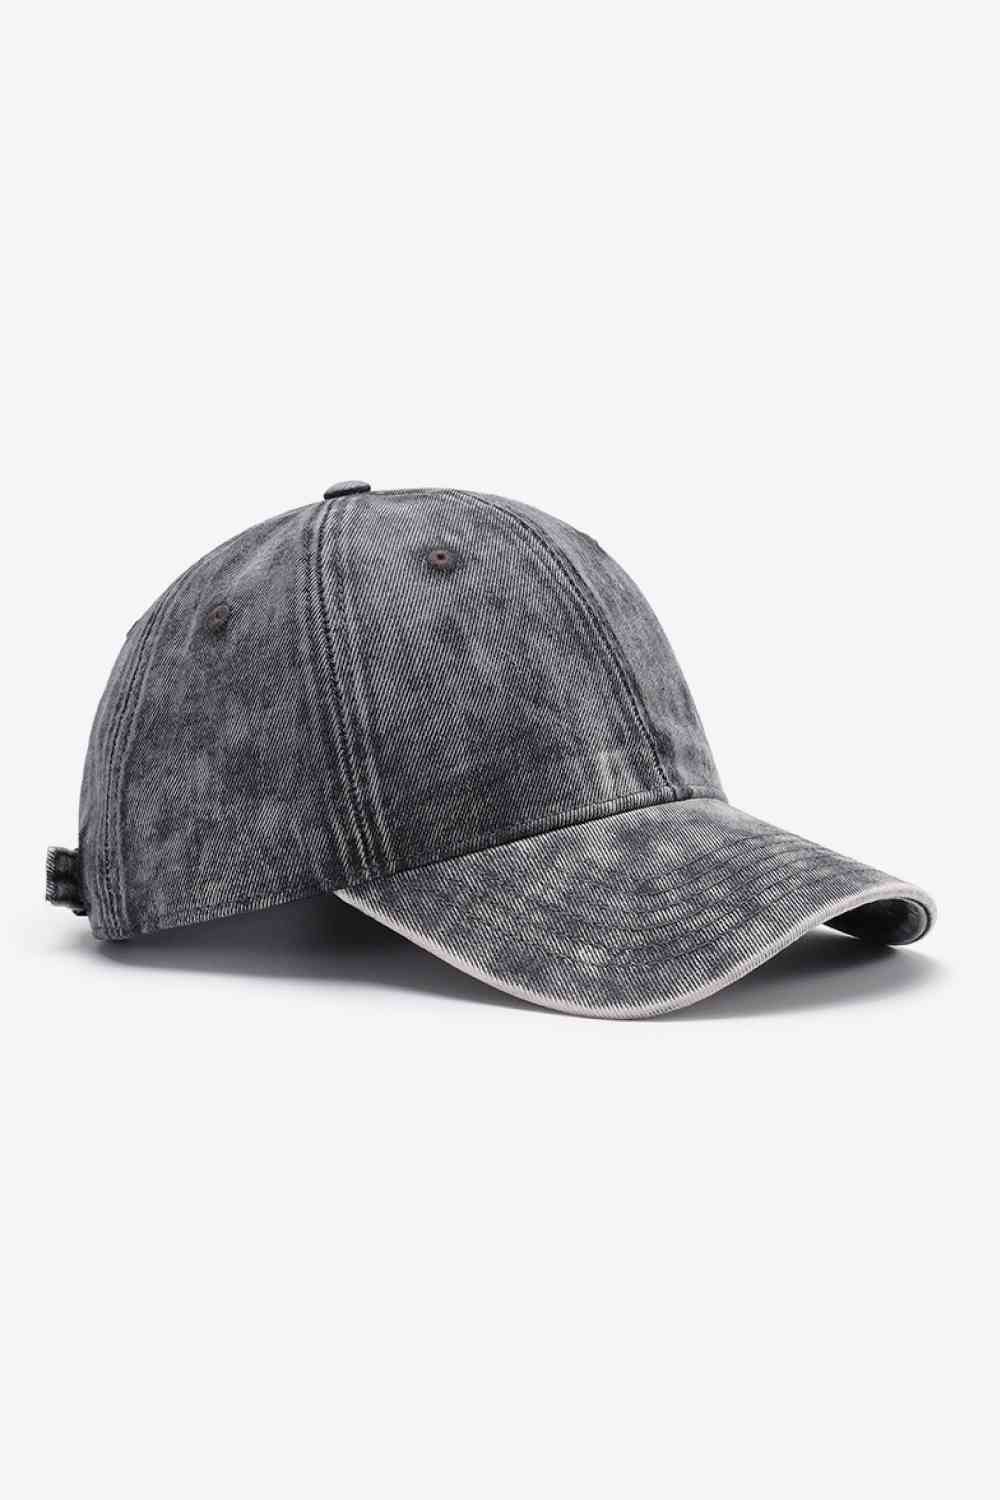 TEEK - Plain Adjustable Baseball Cap HAT TEEK Trend Dark Gray One Size 